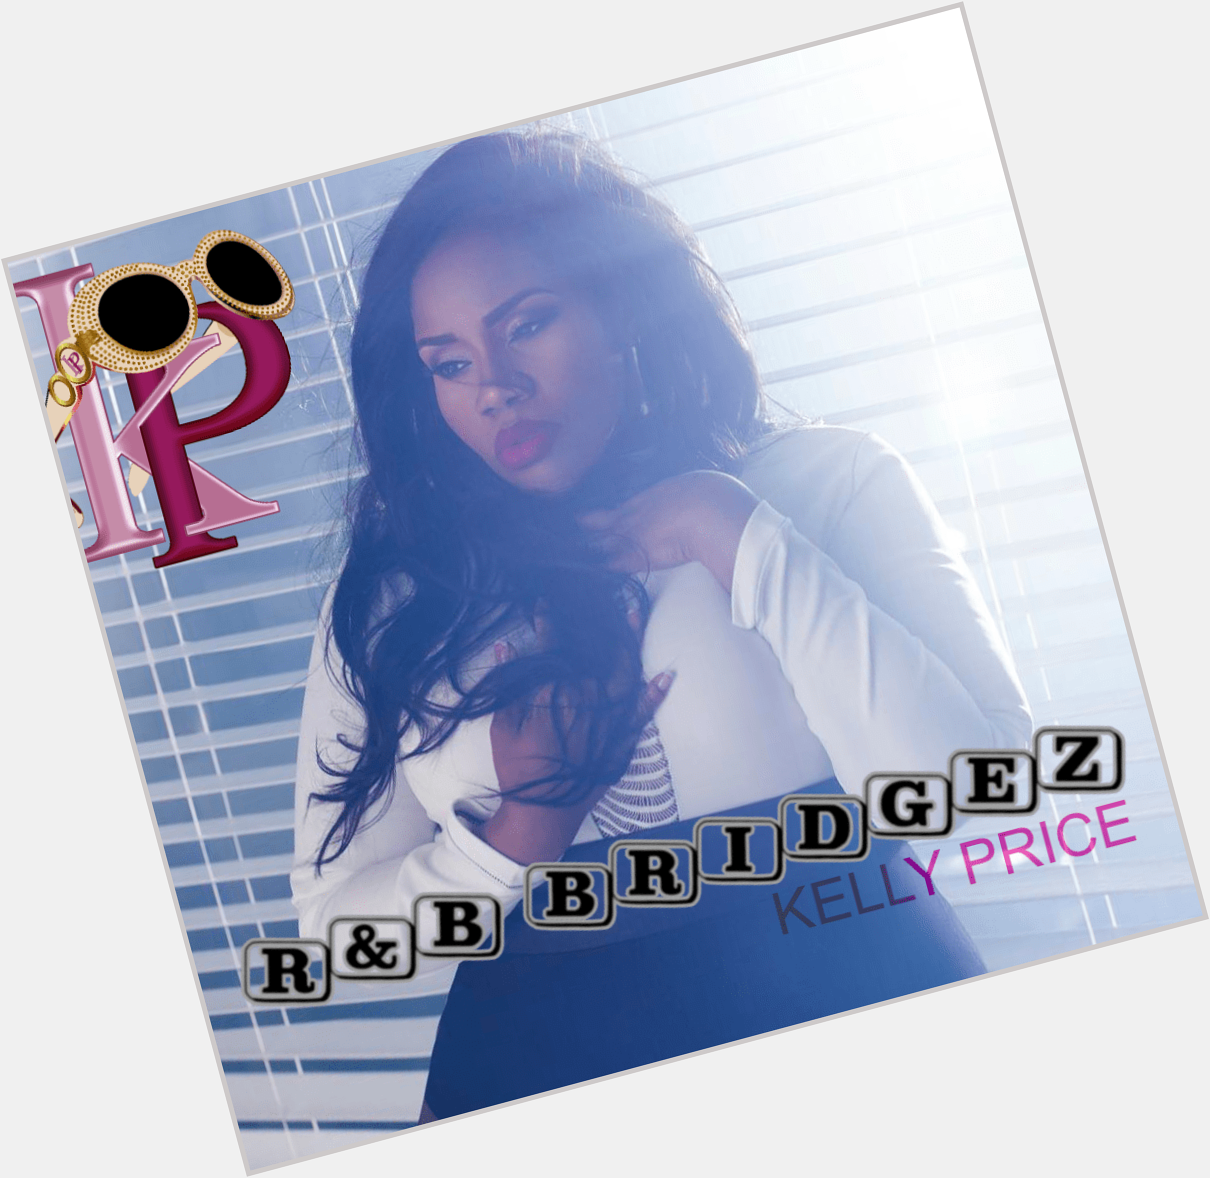 Happy Birthday Kelly Price! | R&B Bridgez: The Anniversary of Kelly Price  